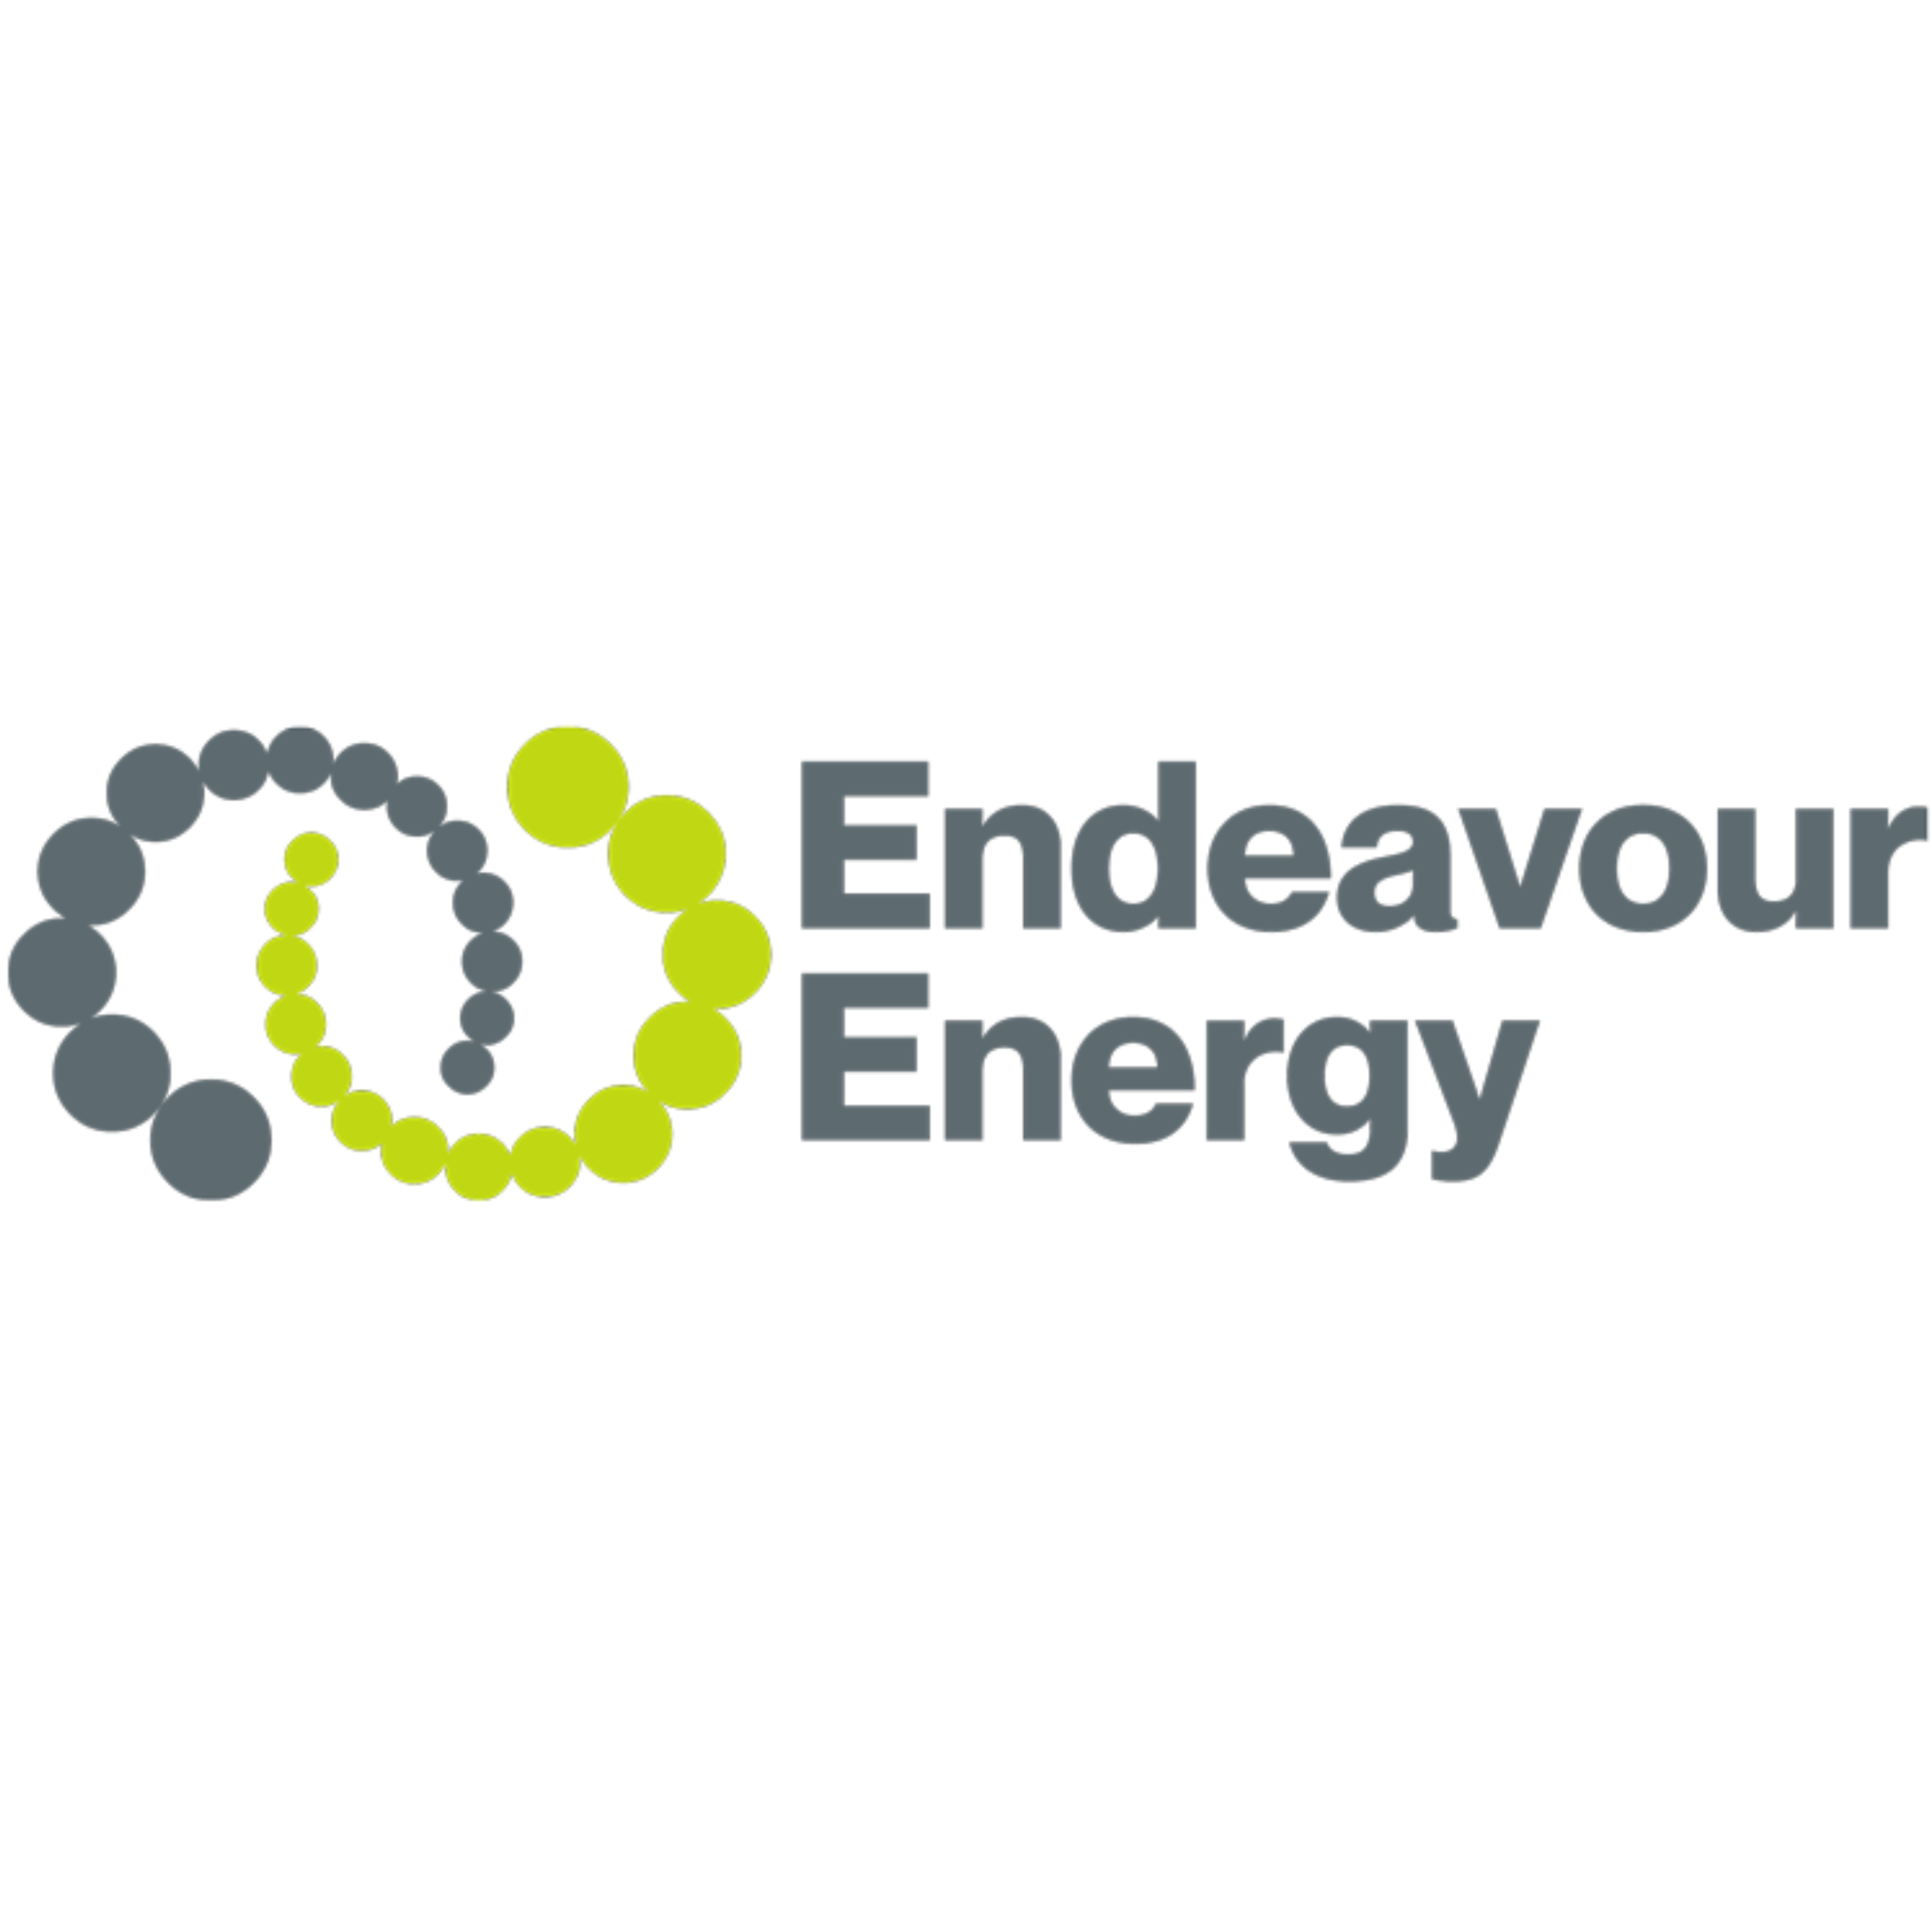 Endeavour energy : Brand Short Description Type Here.